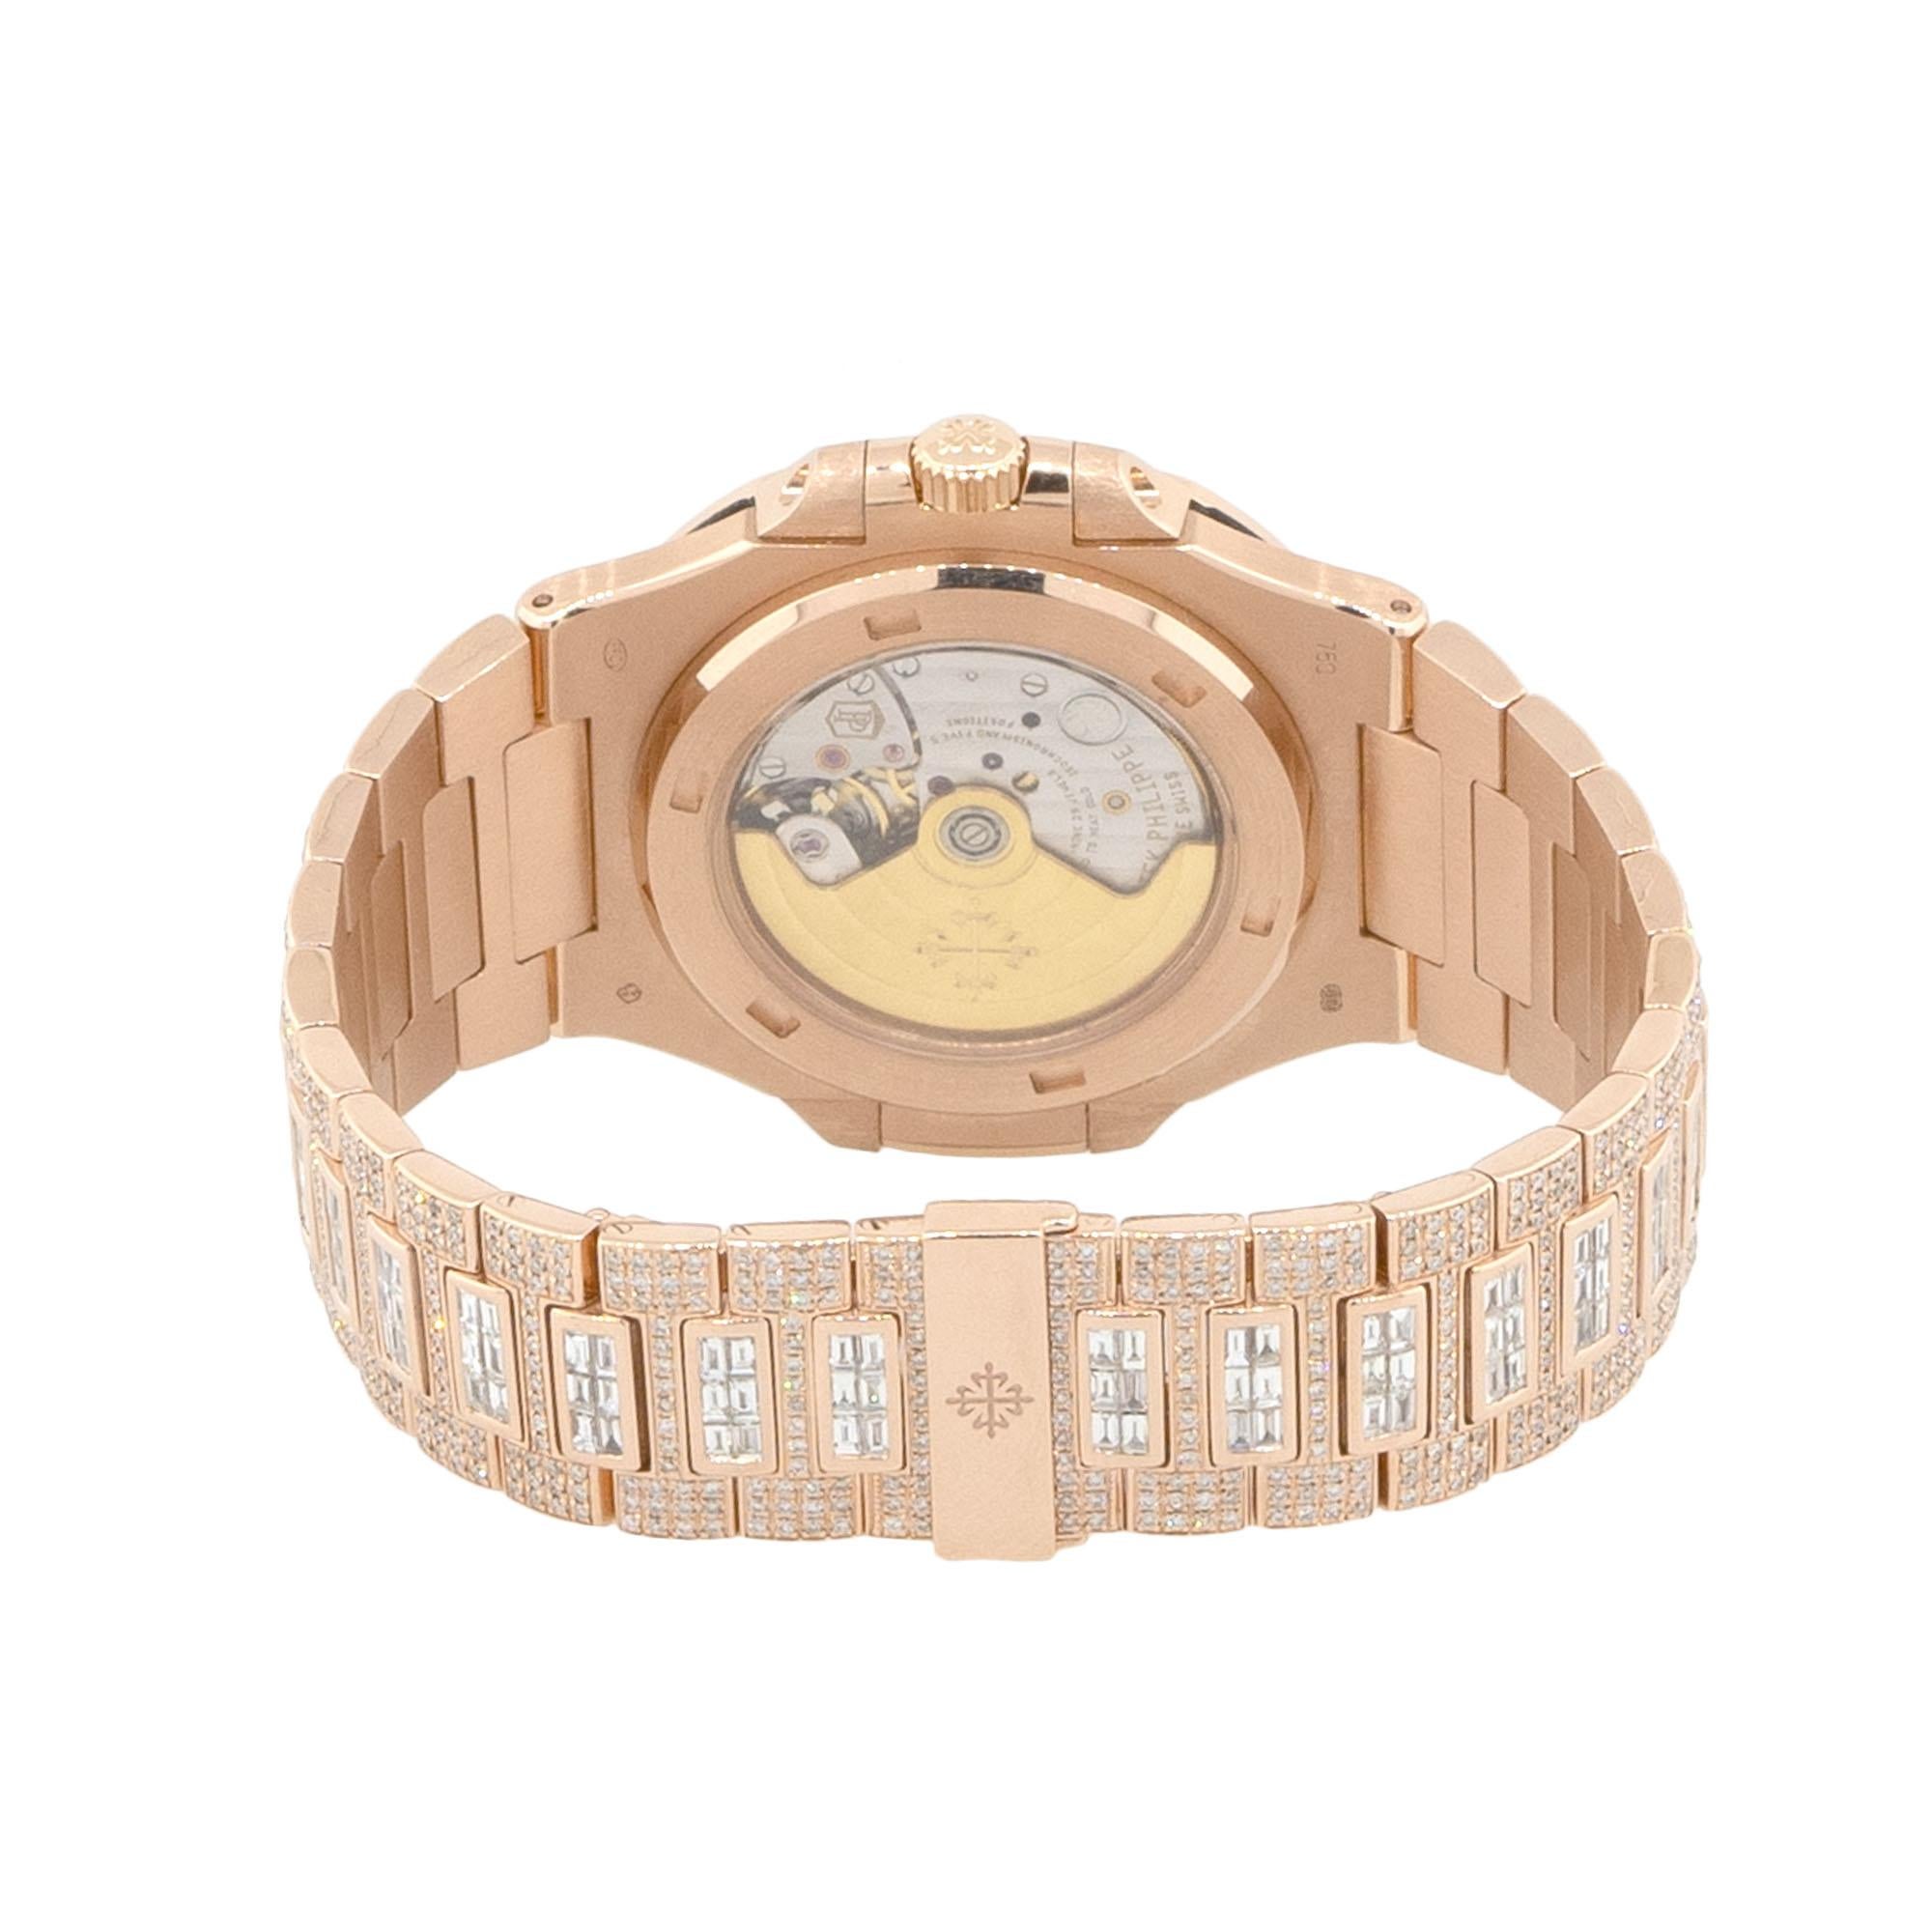 Mixed Cut Patek Philippe Nautilus Round & Baguette Diamond 18 Karat Watch in Stock